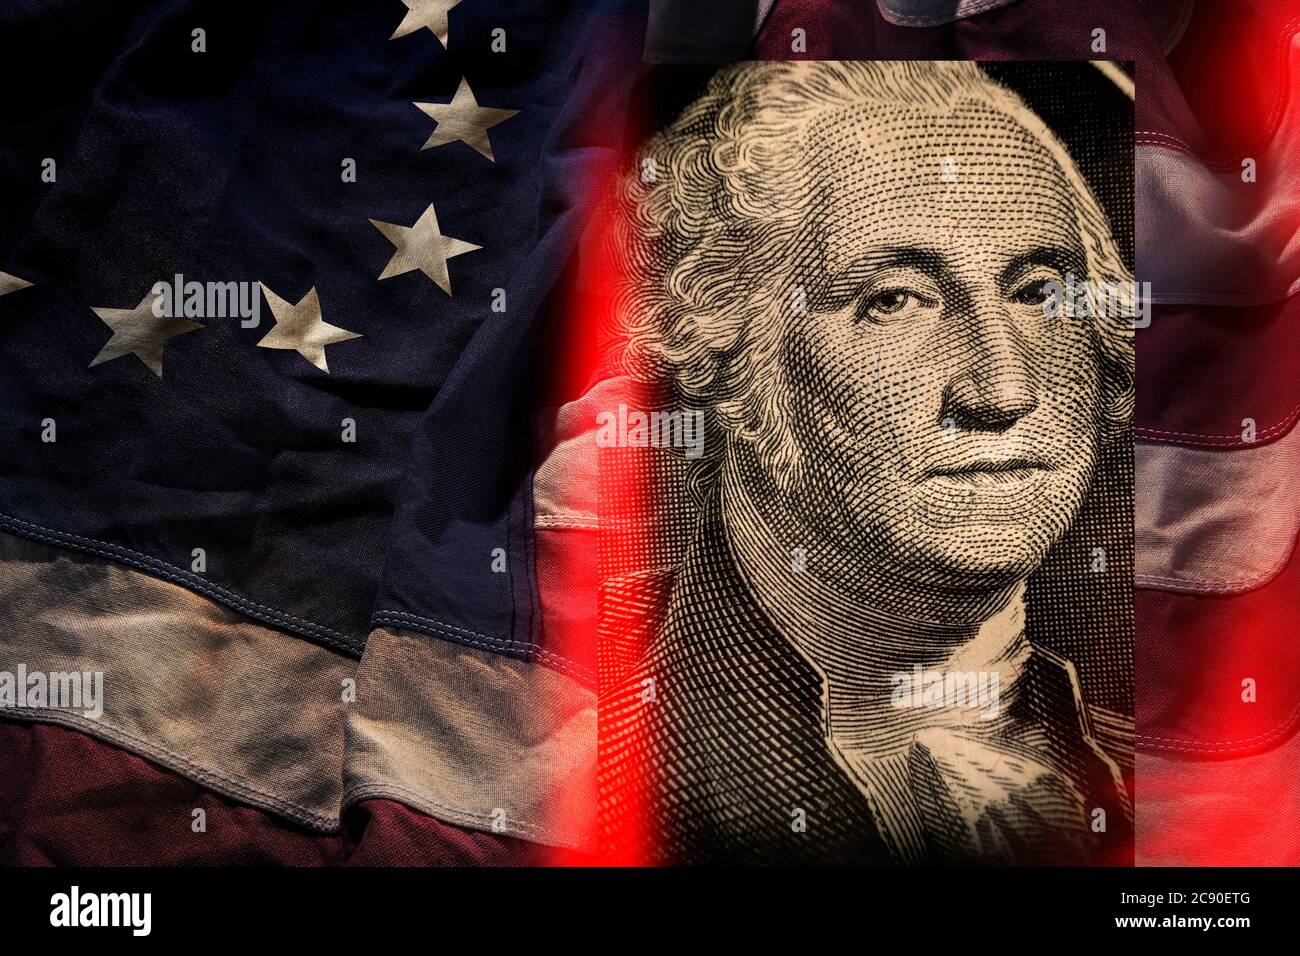 George Washington against American flag Stock Photo